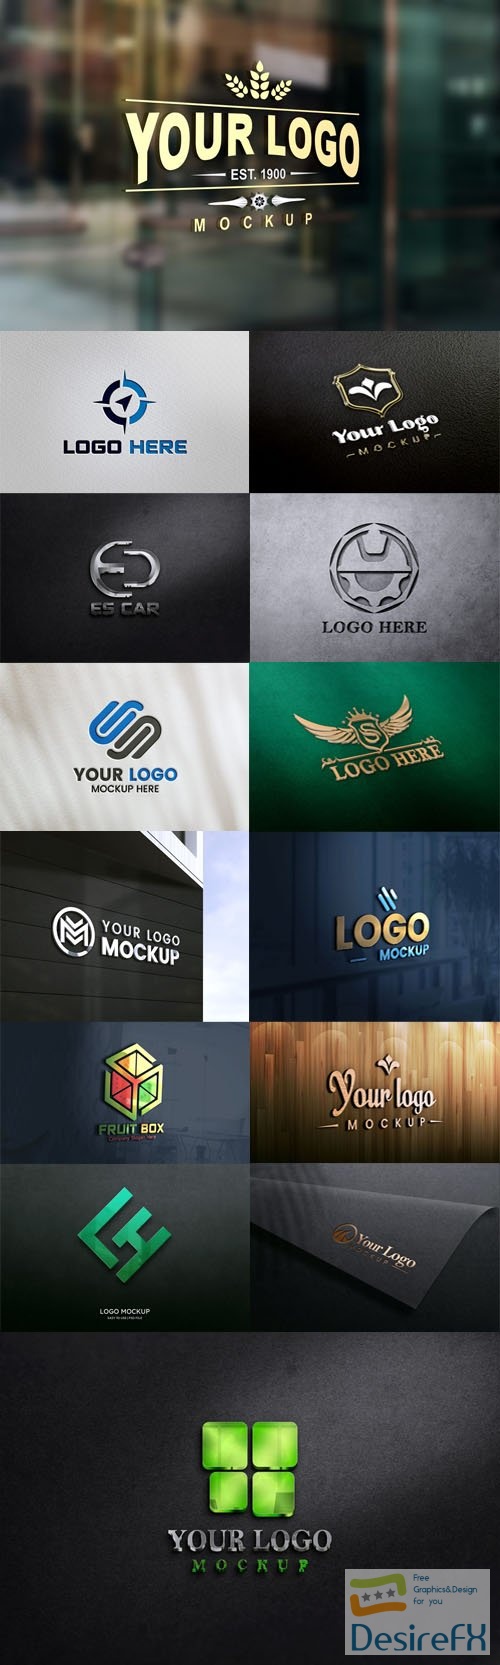 10+ Photorealistic 3D Logos PSD Mockups Templates Collection